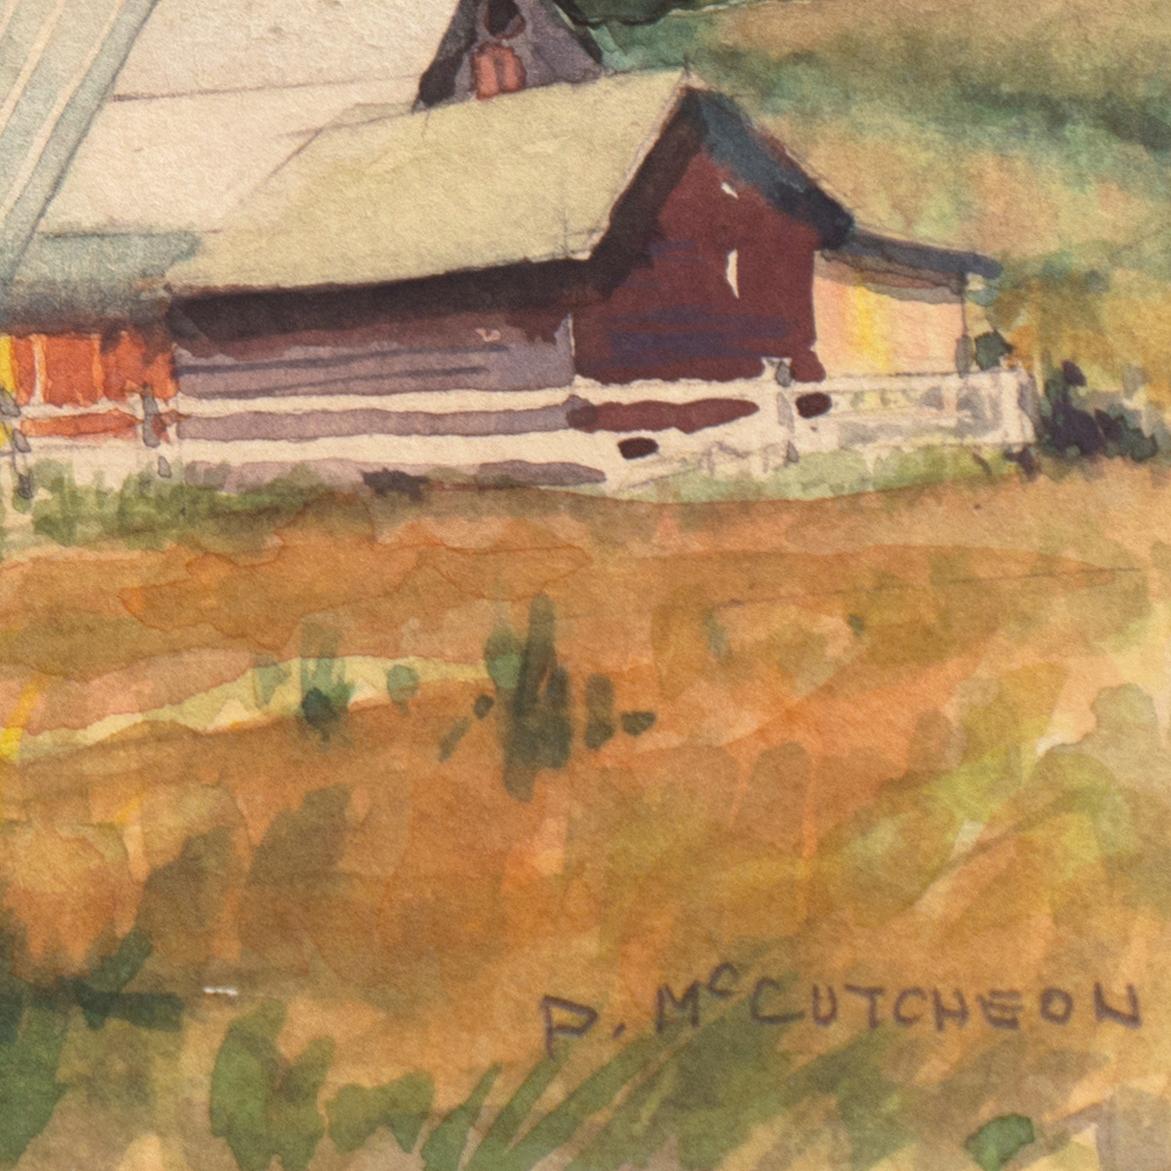 'Rural Landscape with Dutch Barn', Ranch - Art by P. McCutcheon